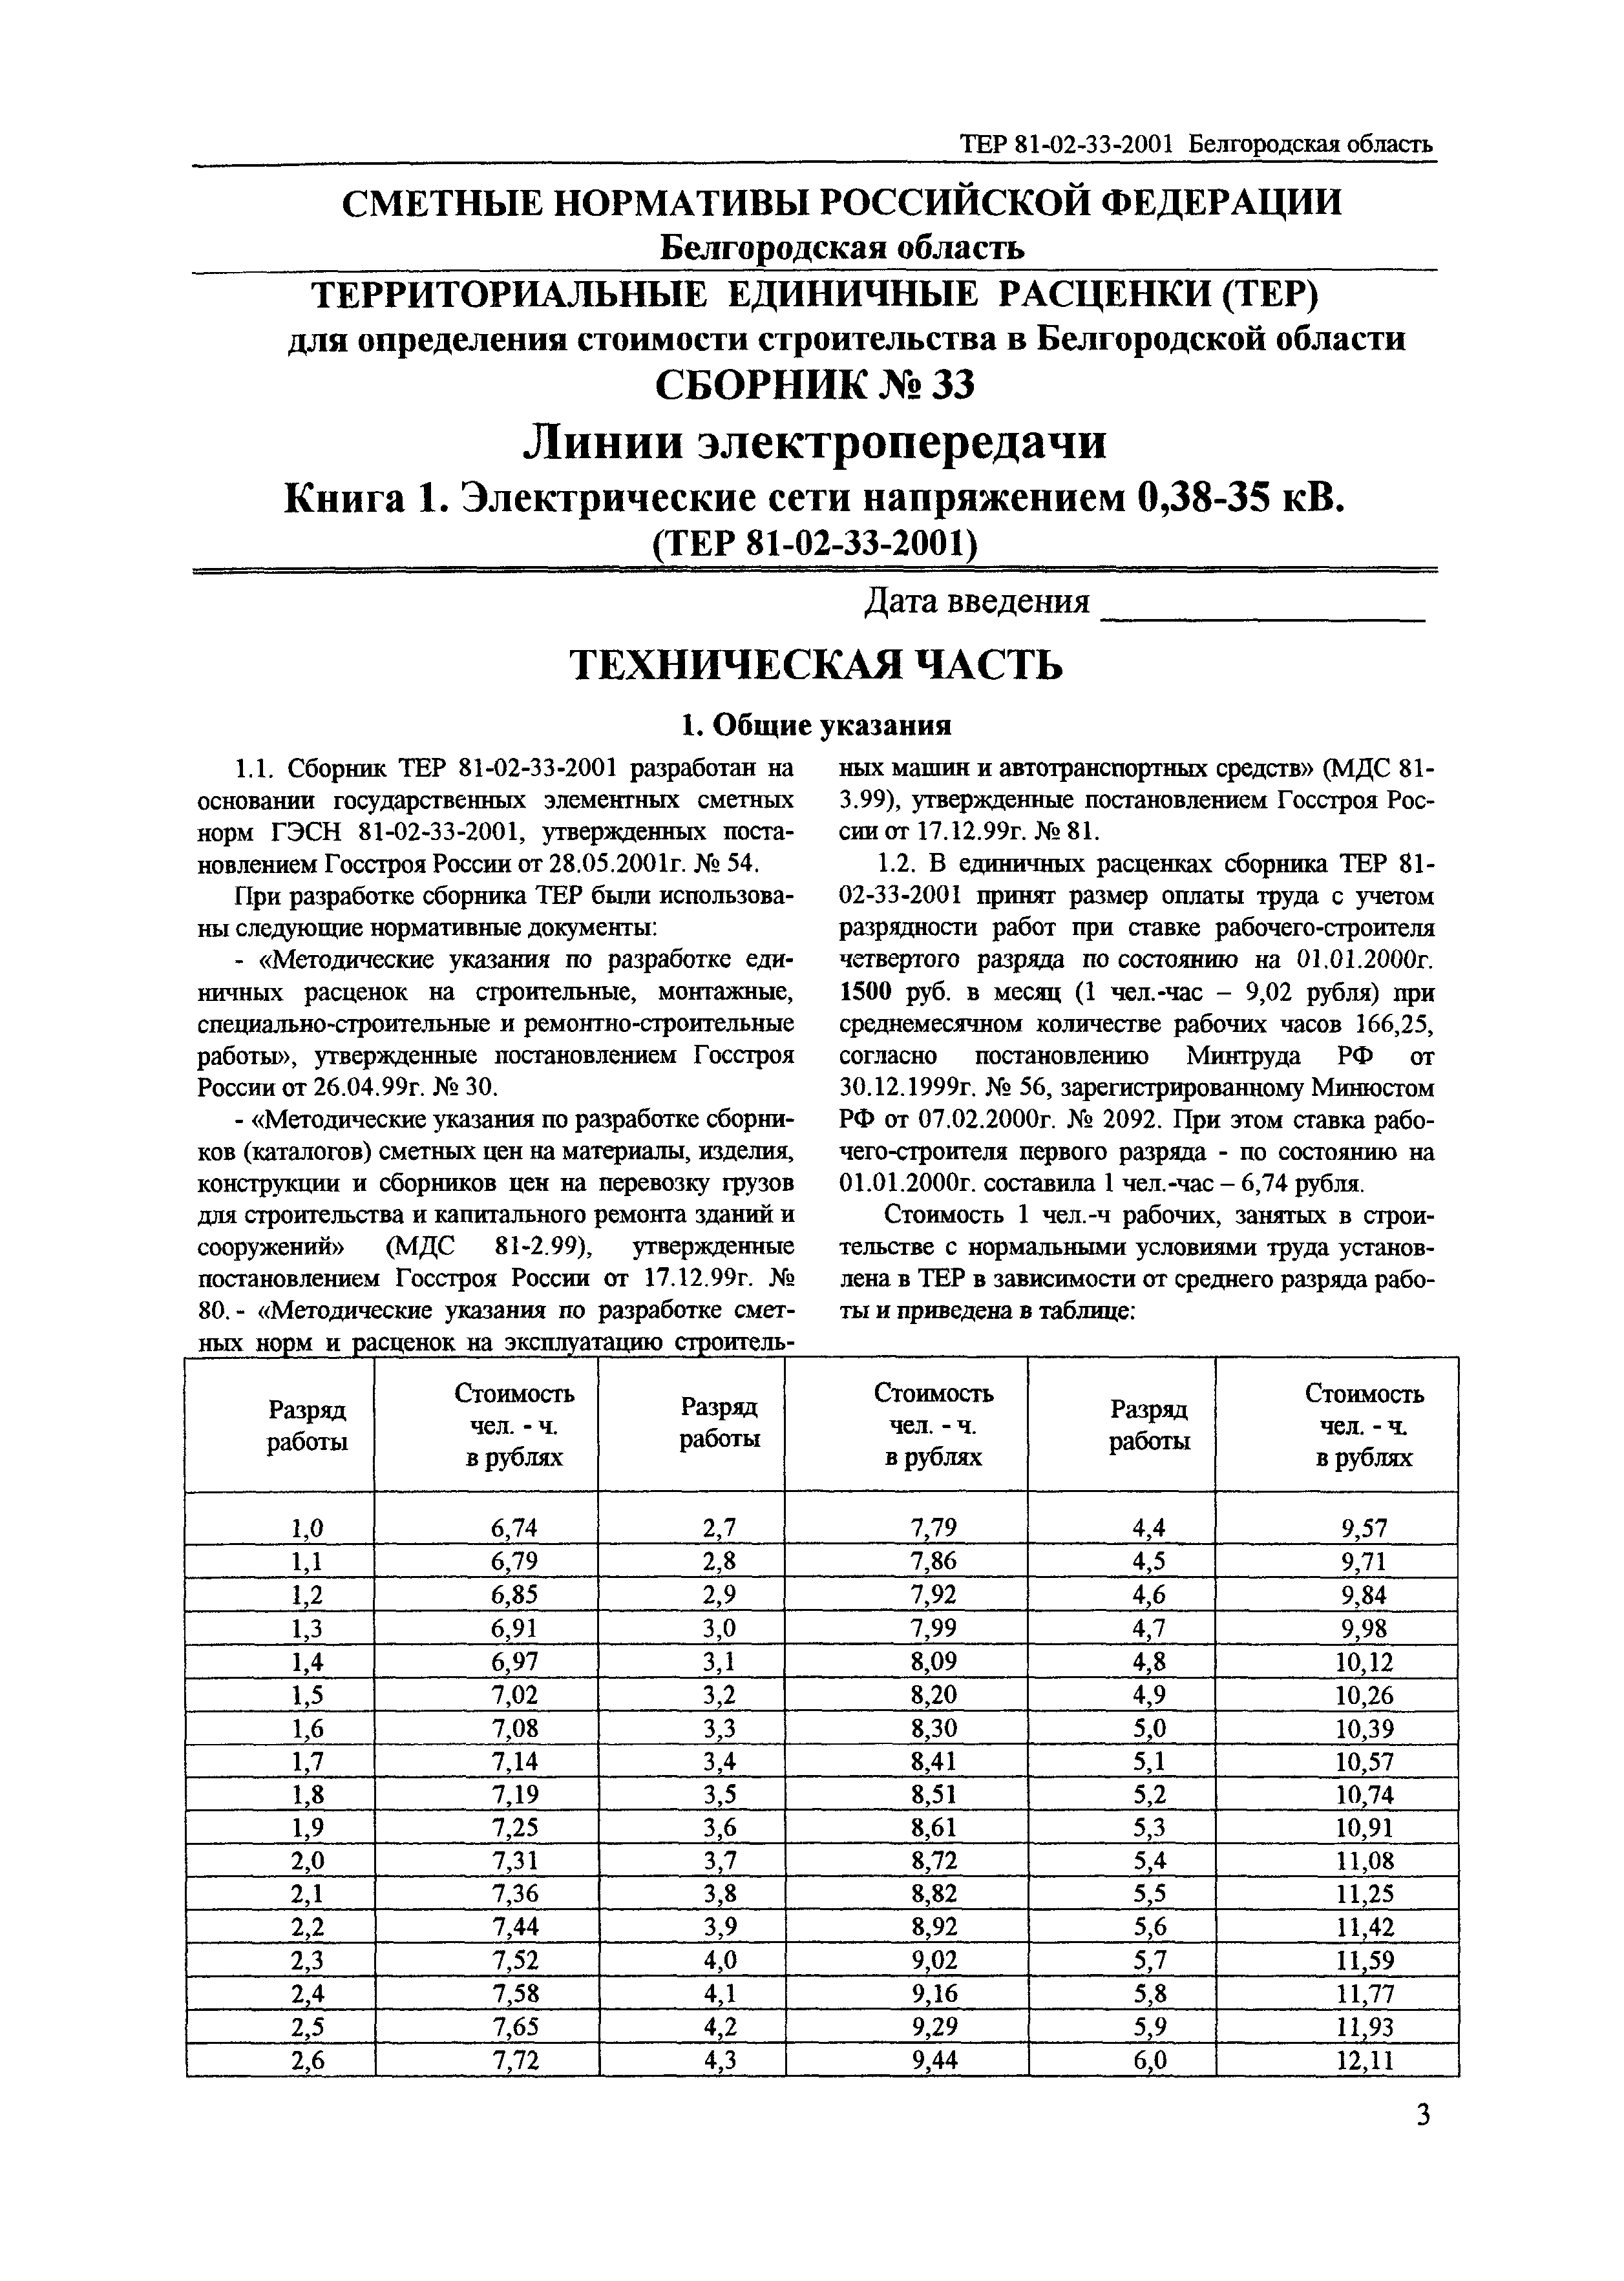 ТЕР 2001-33 Белгородской области